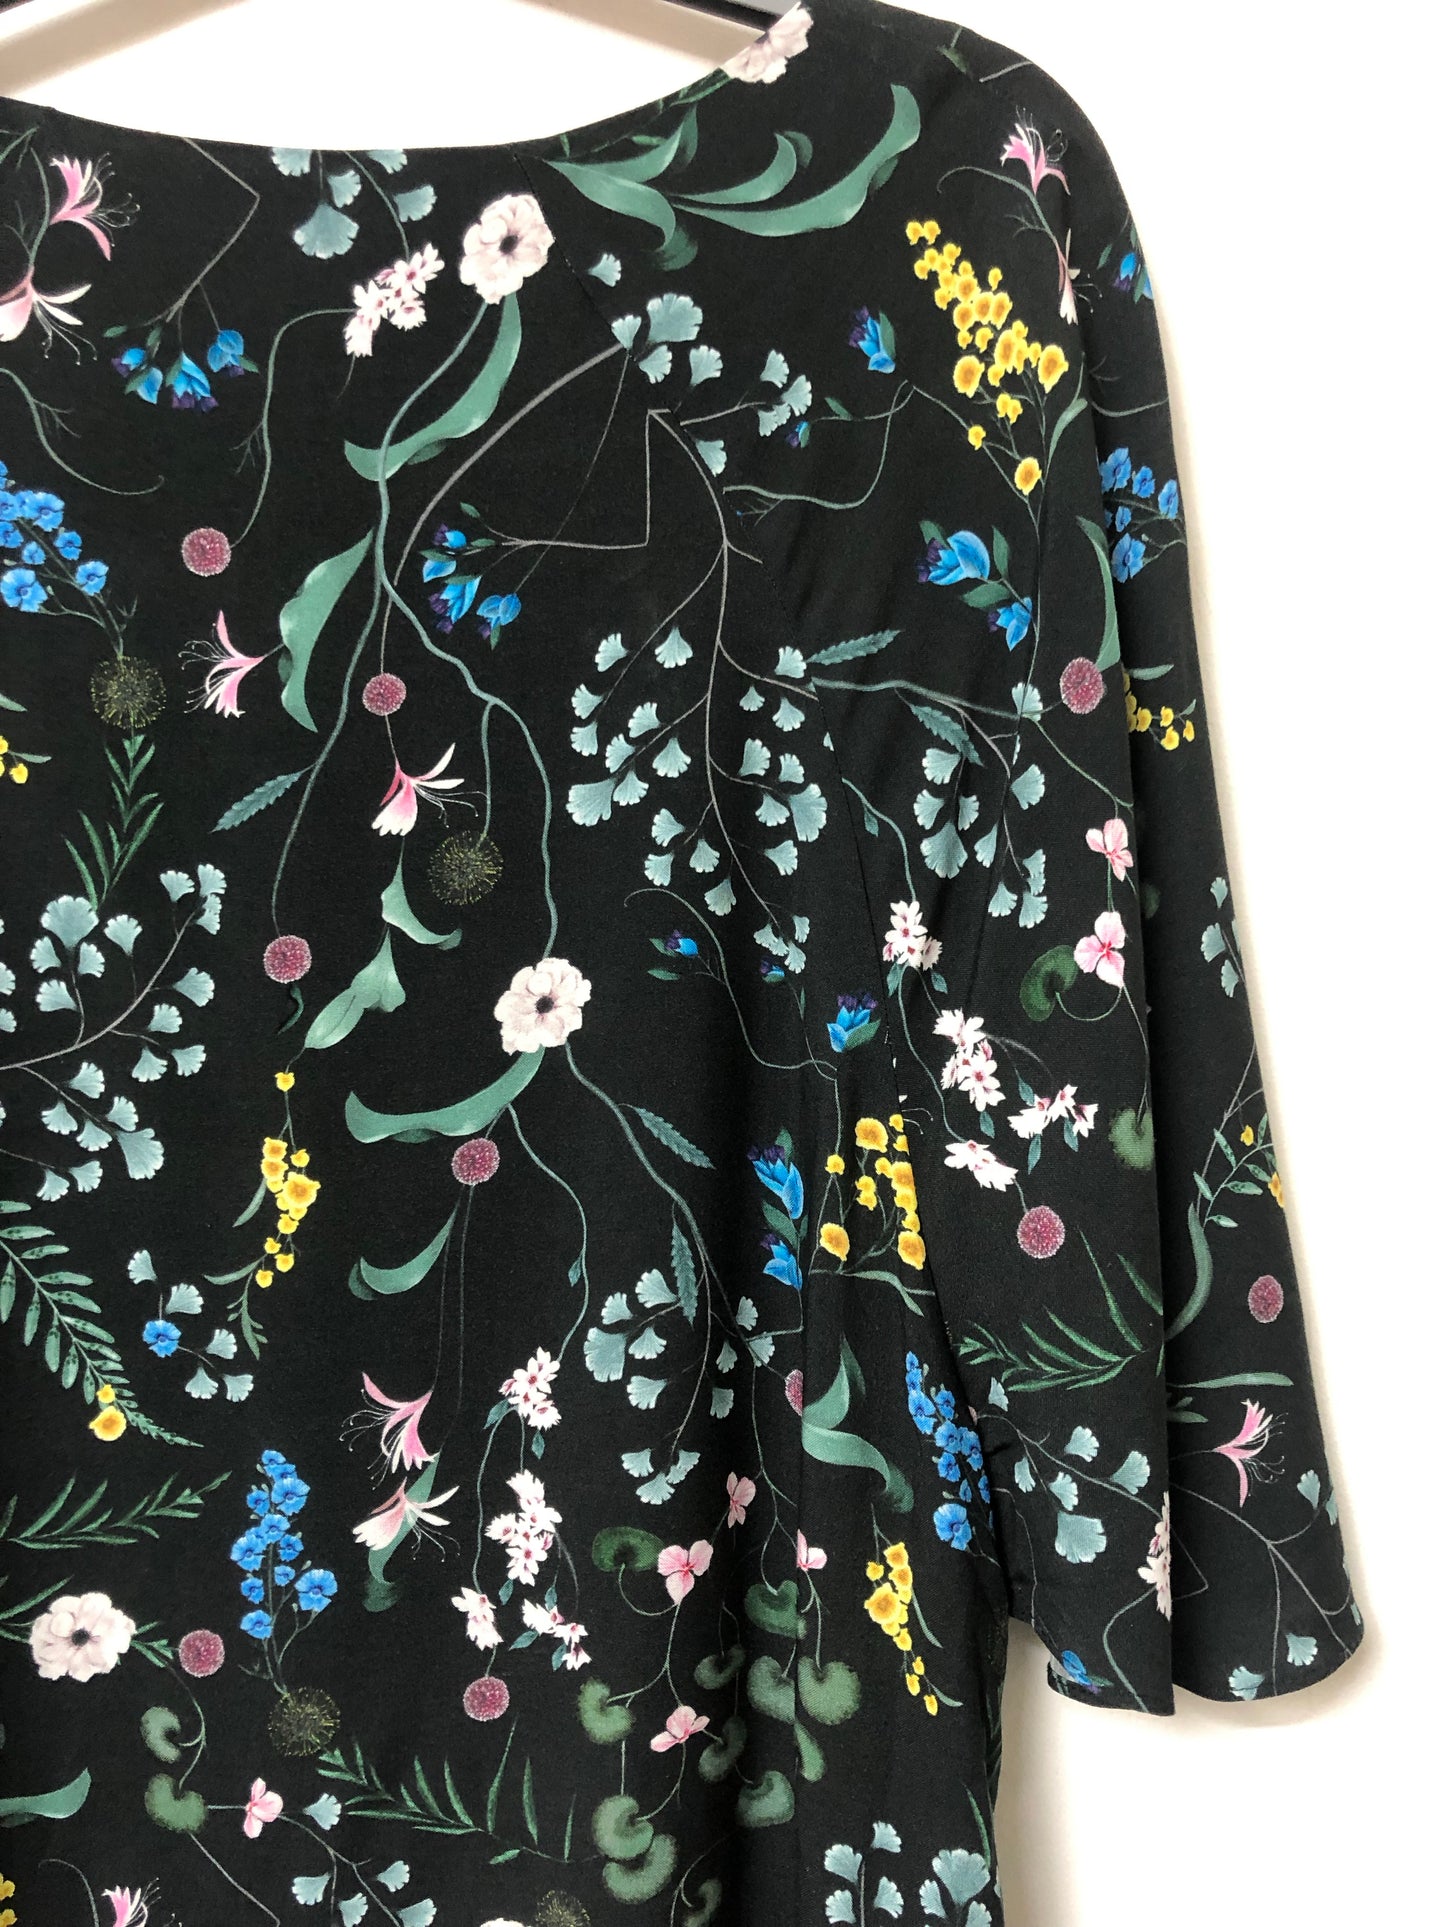 Anna Glover X H&M Black Floral Print Top Size 12 BNWT